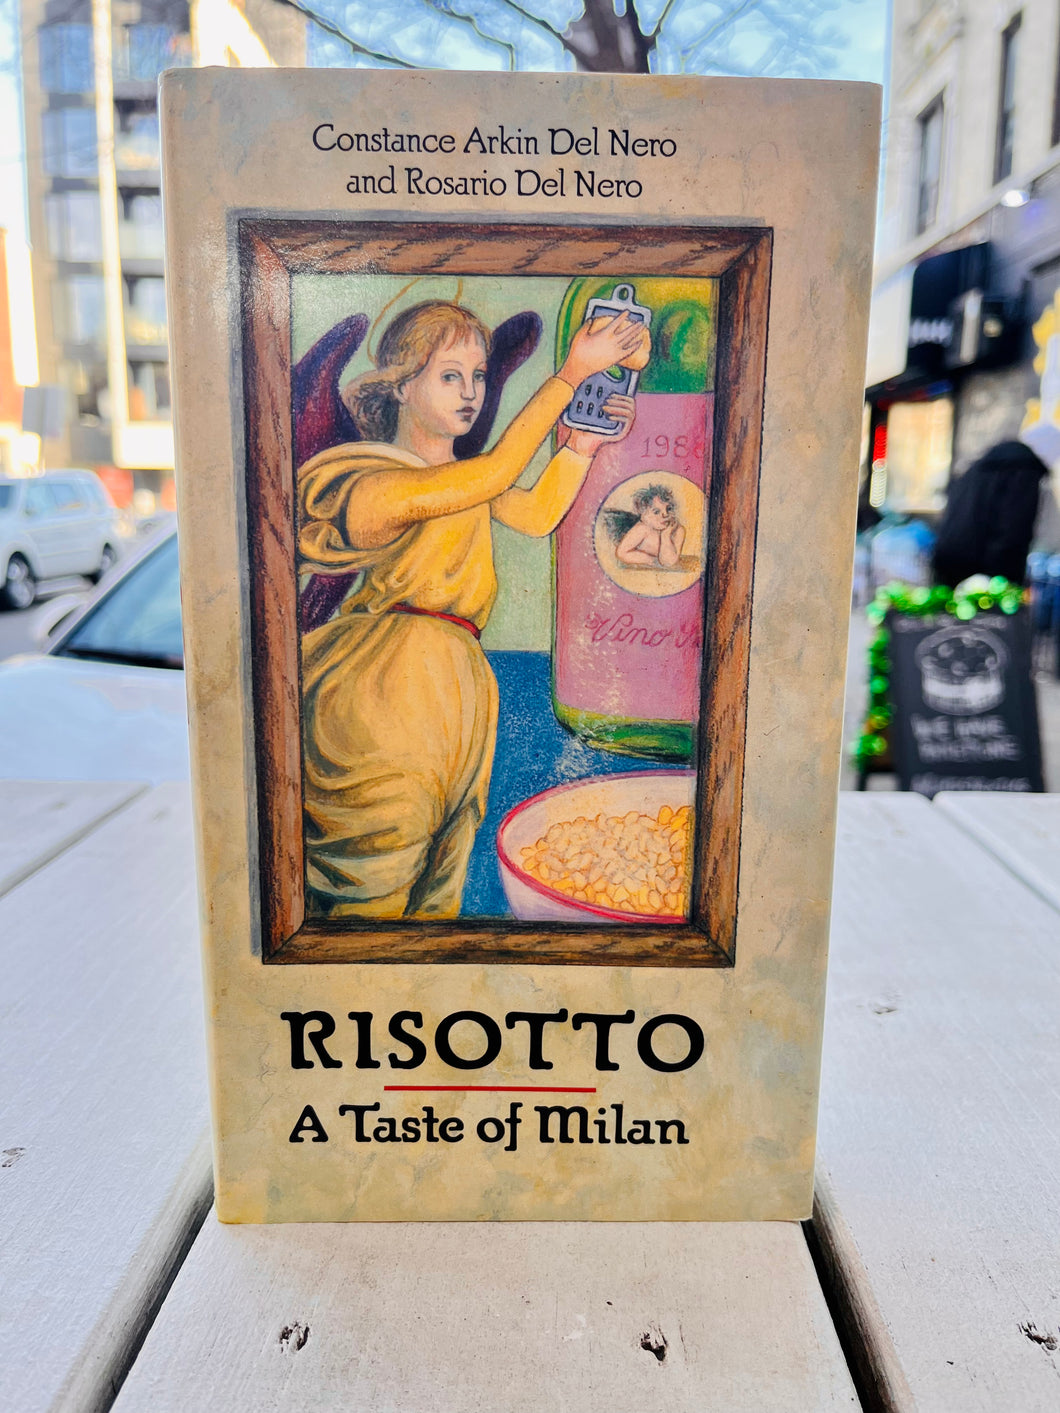 Risotto: A Taste of Milan by Constance Akin del Nero and Rosario del Nero